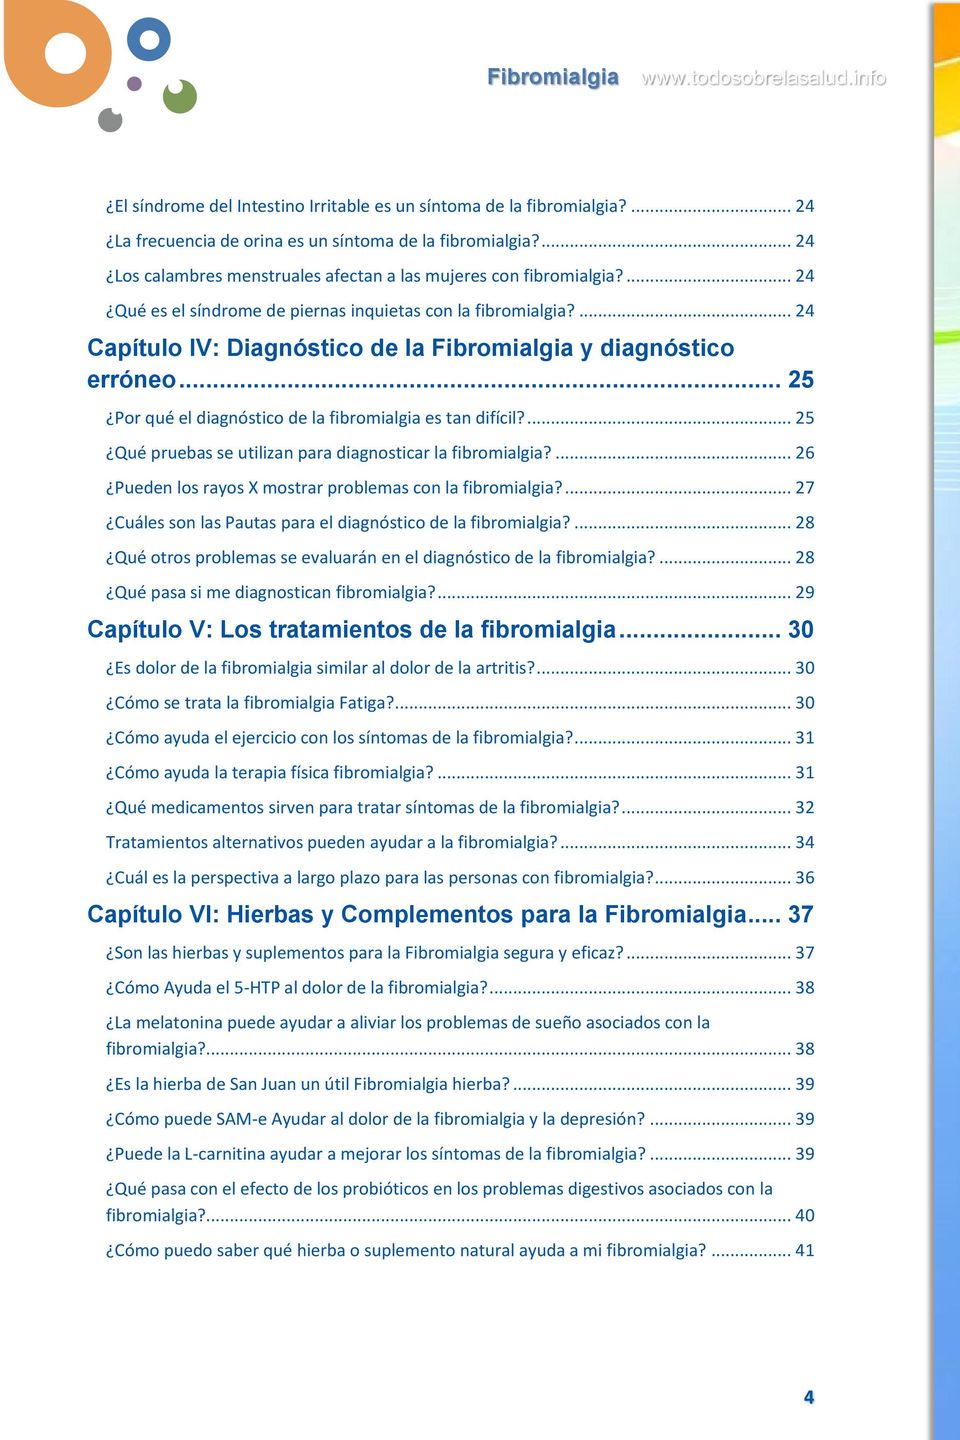 ... 24 Capítulo IV: Diagnóstico de la Fibromialgia y diagnóstico erróneo... 25 Por qué el diagnóstico de la fibromialgia es tan difícil?... 25 Qué pruebas se utilizan para diagnosticar la fibromialgia?